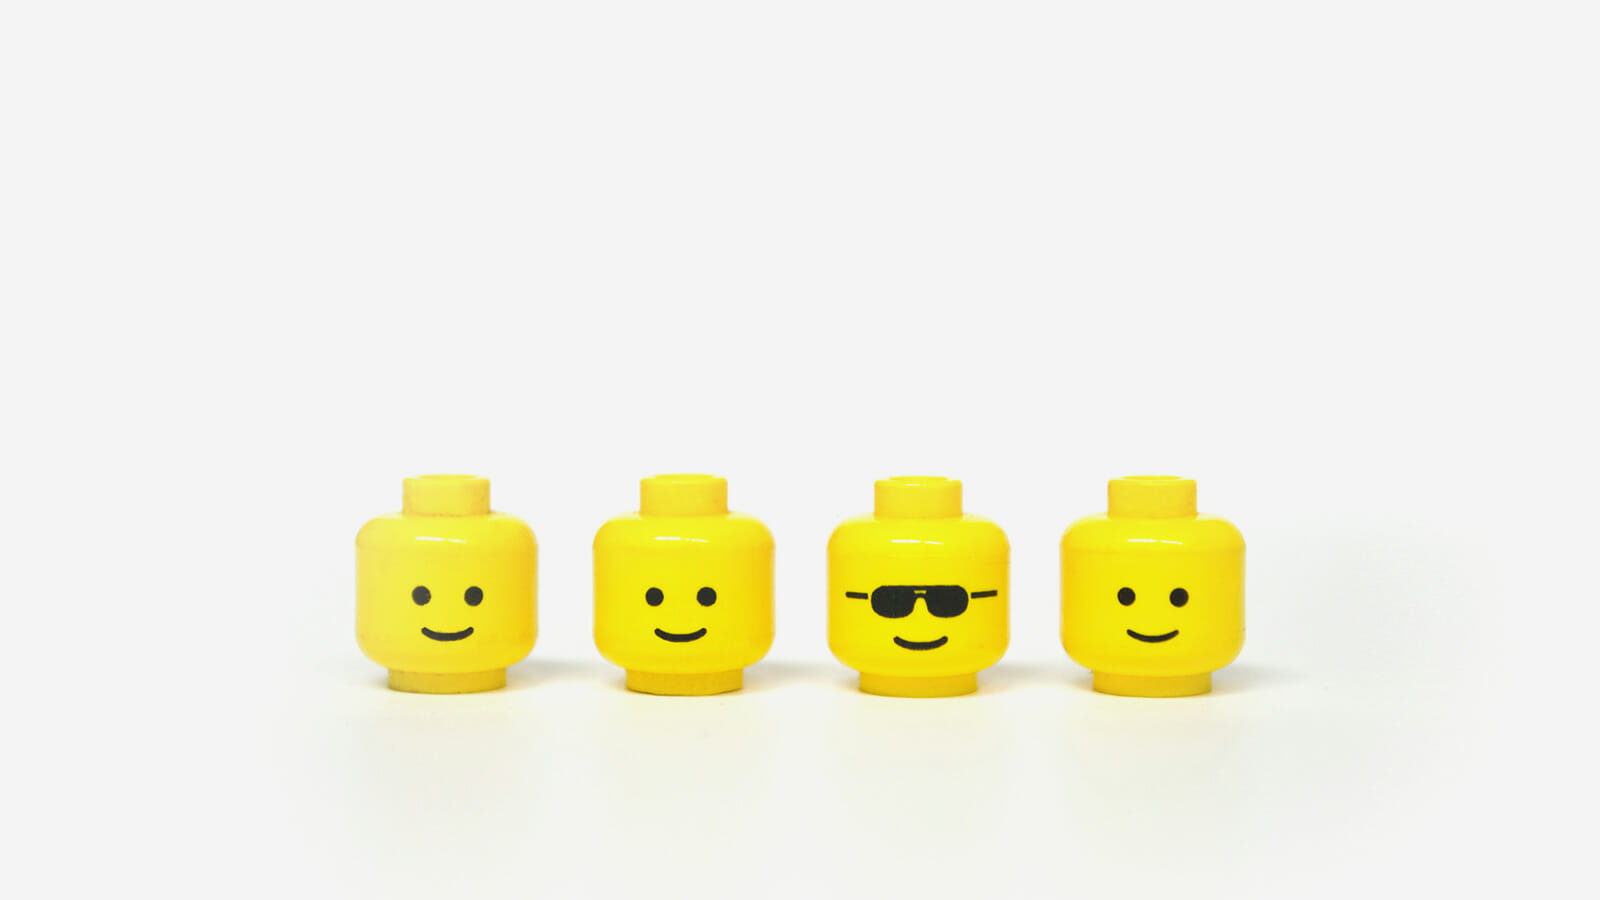 Lego people heads